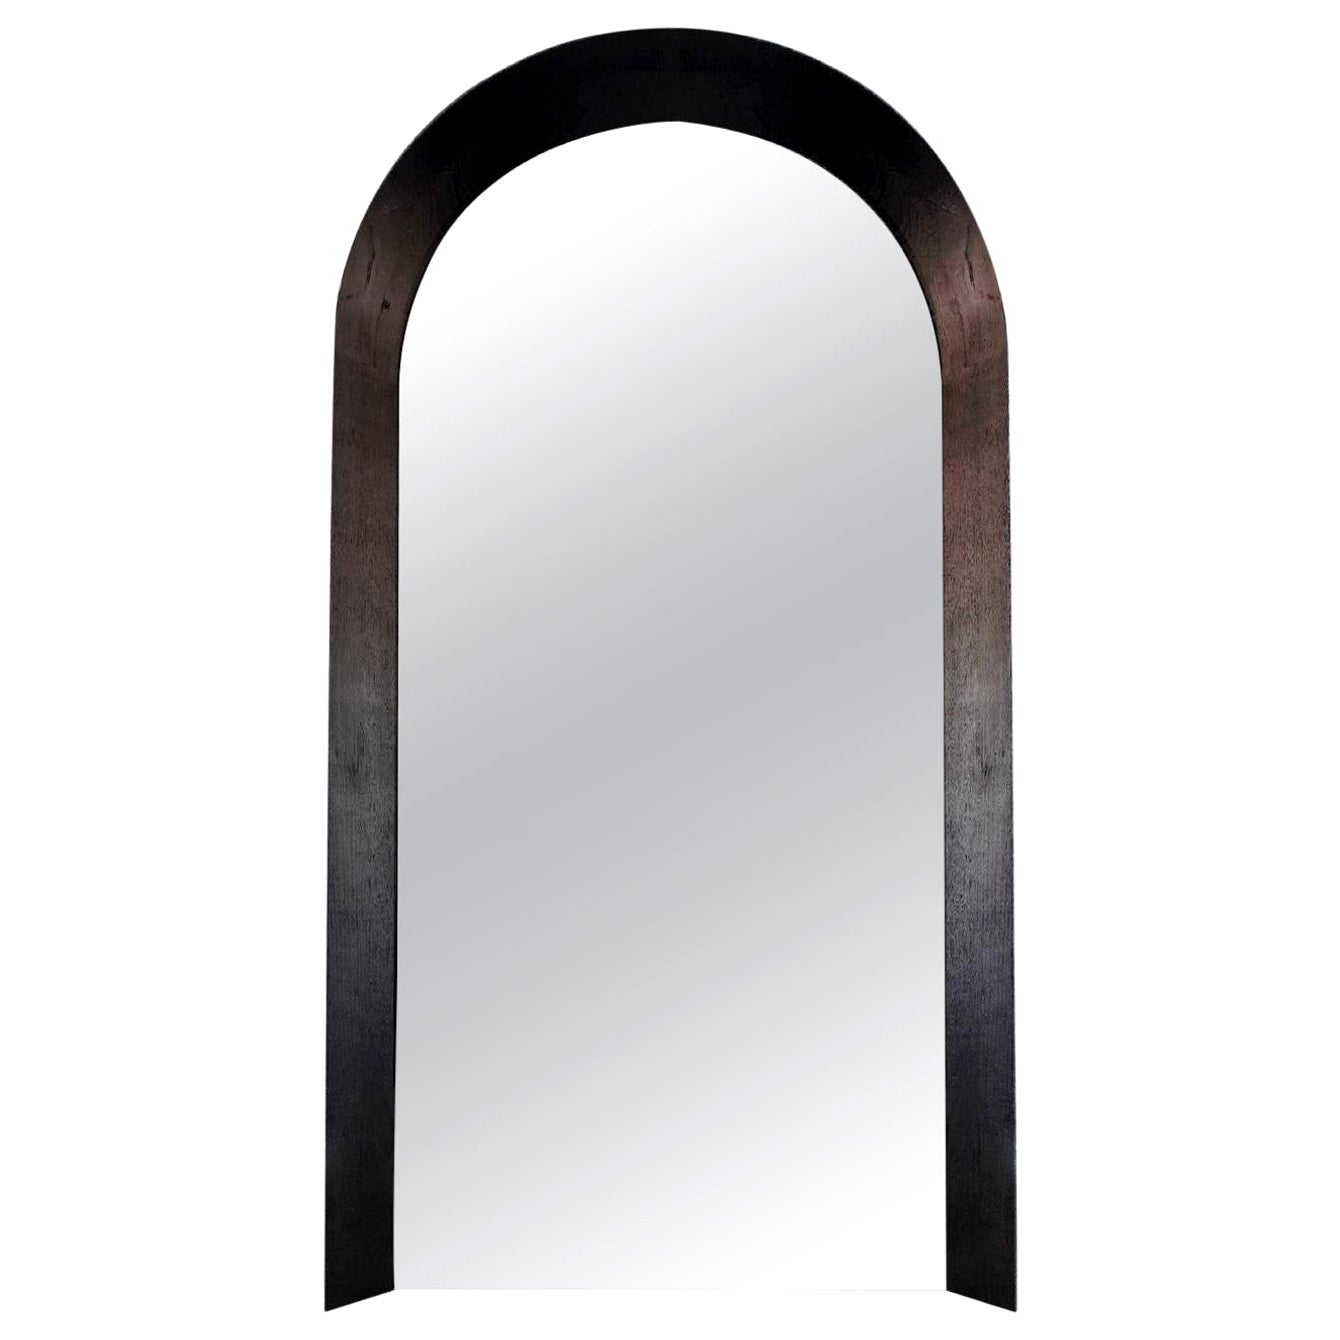 Black Painted Wooden Full Length Gate Mirror (Lead time 5 weeks)